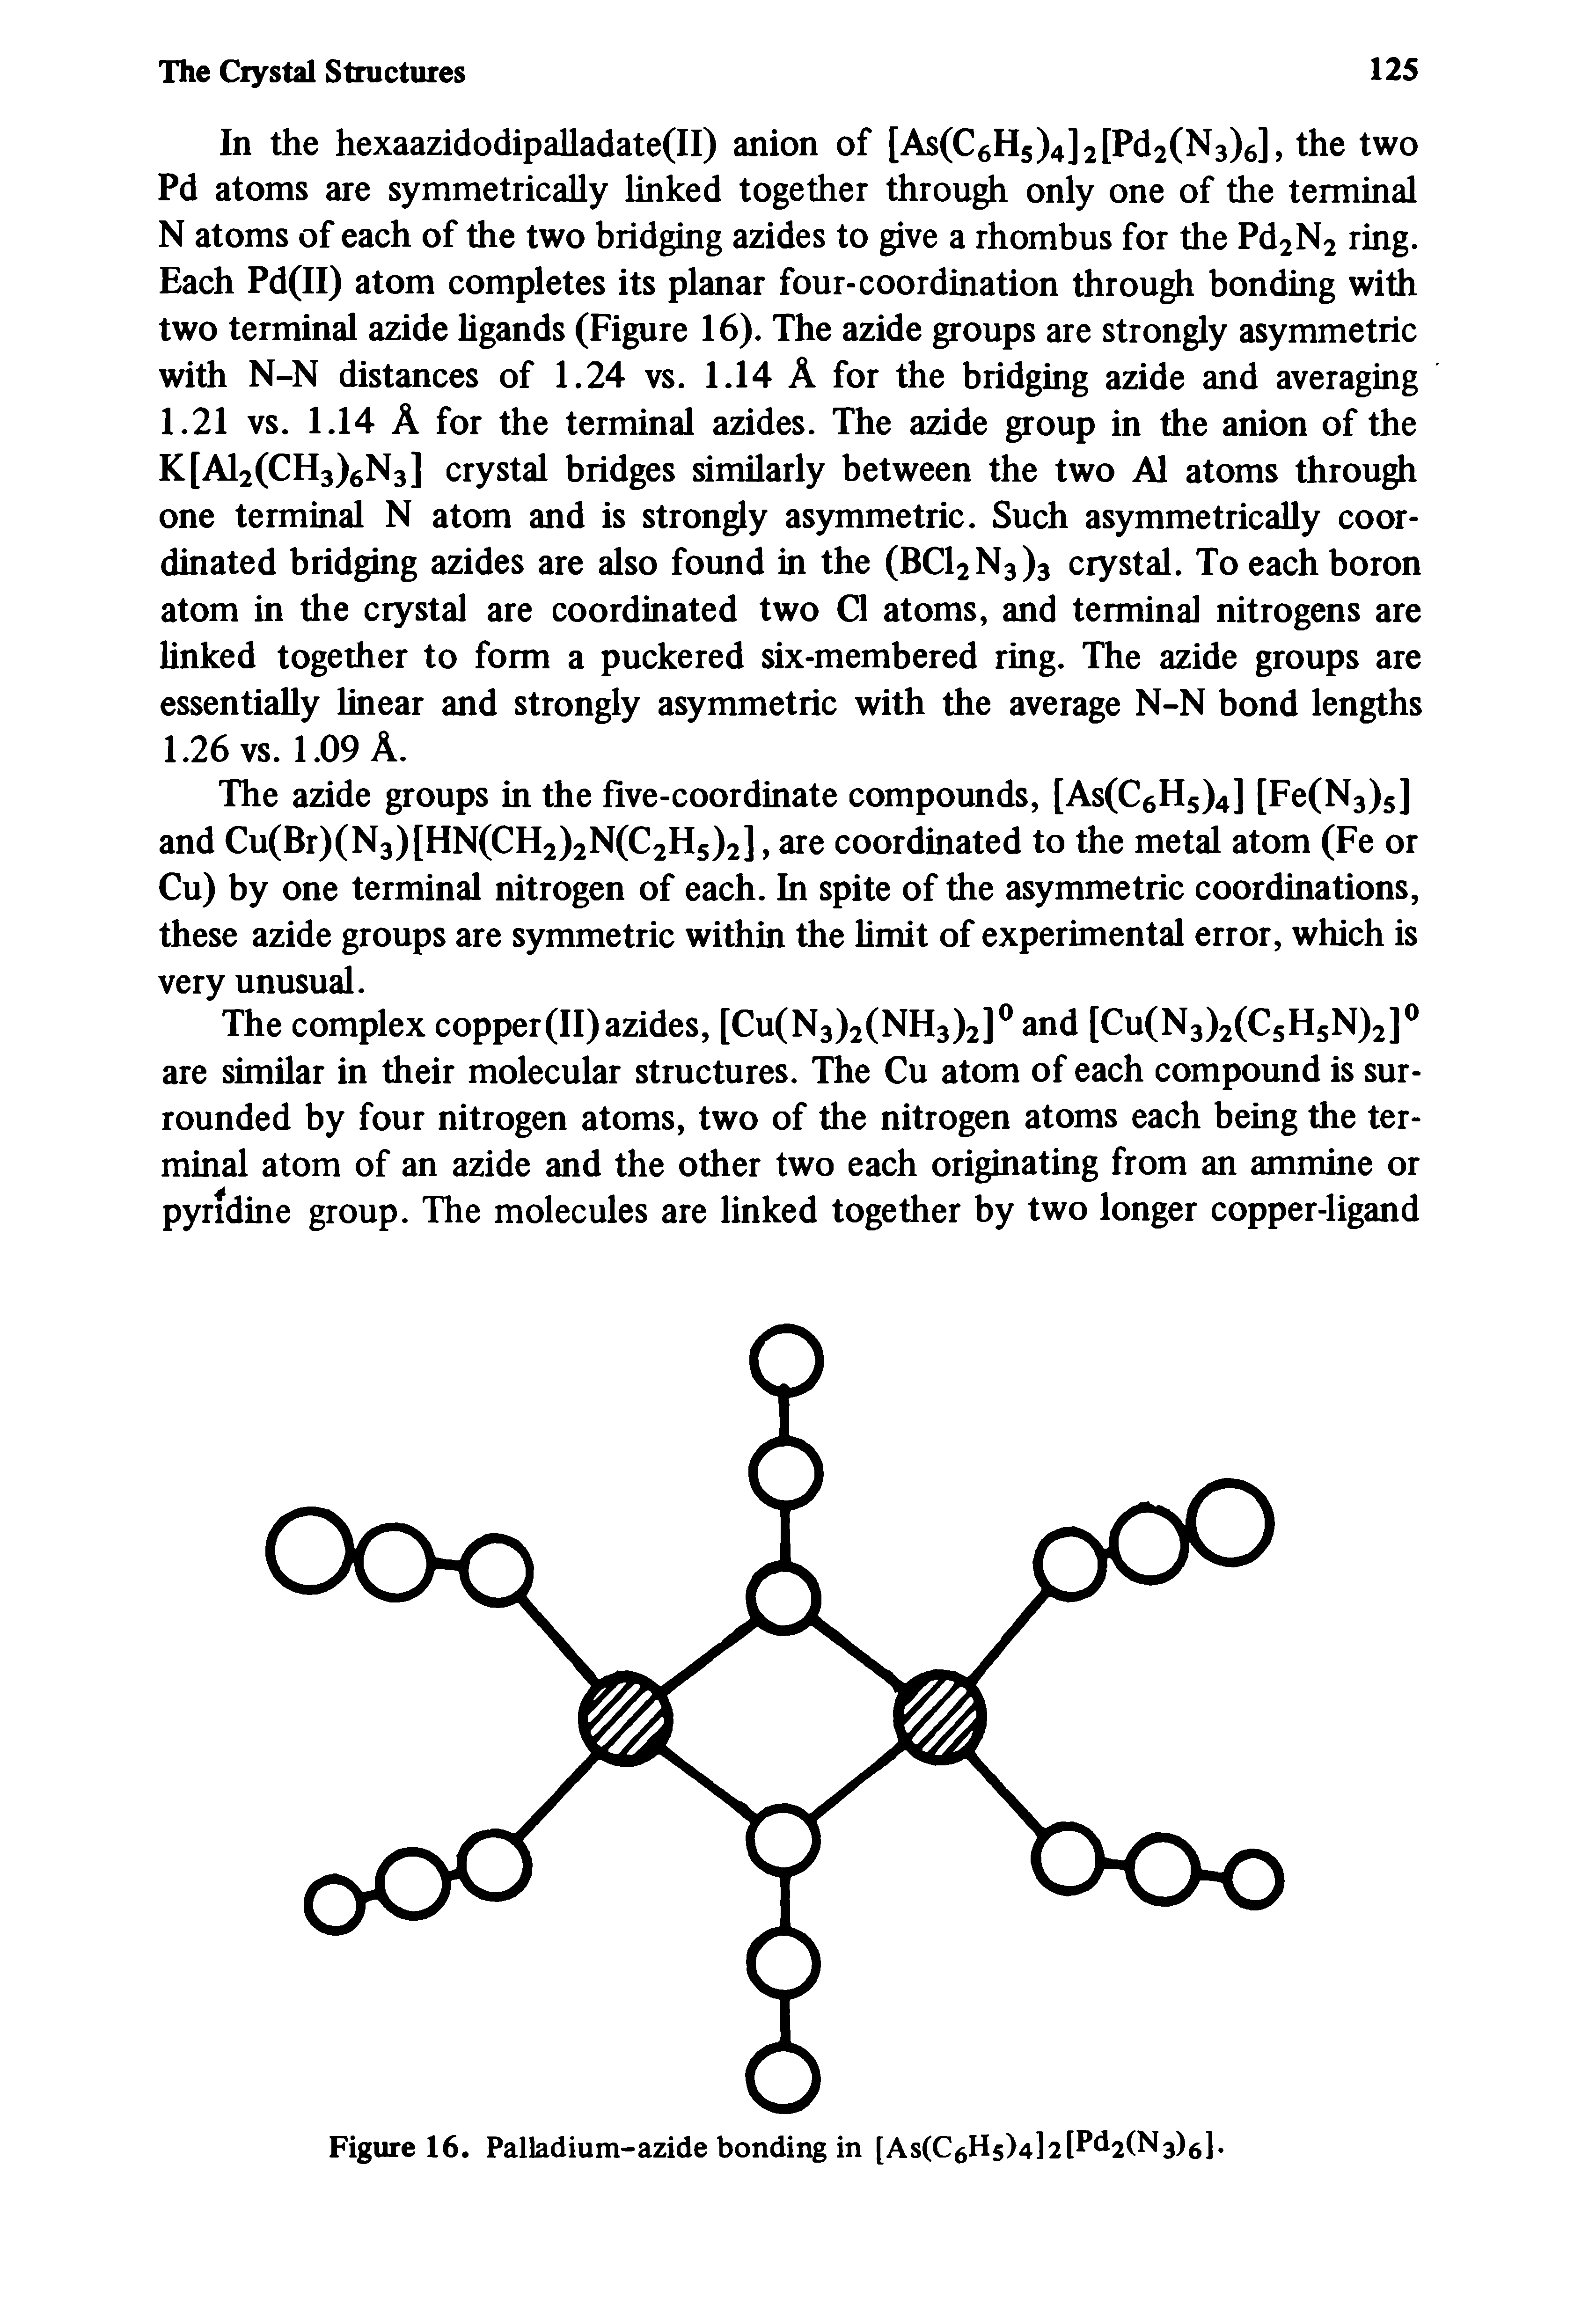 Figure 16. Palladium-azide bonding in [As(C6Hs)4]2lPd2(N3)6].